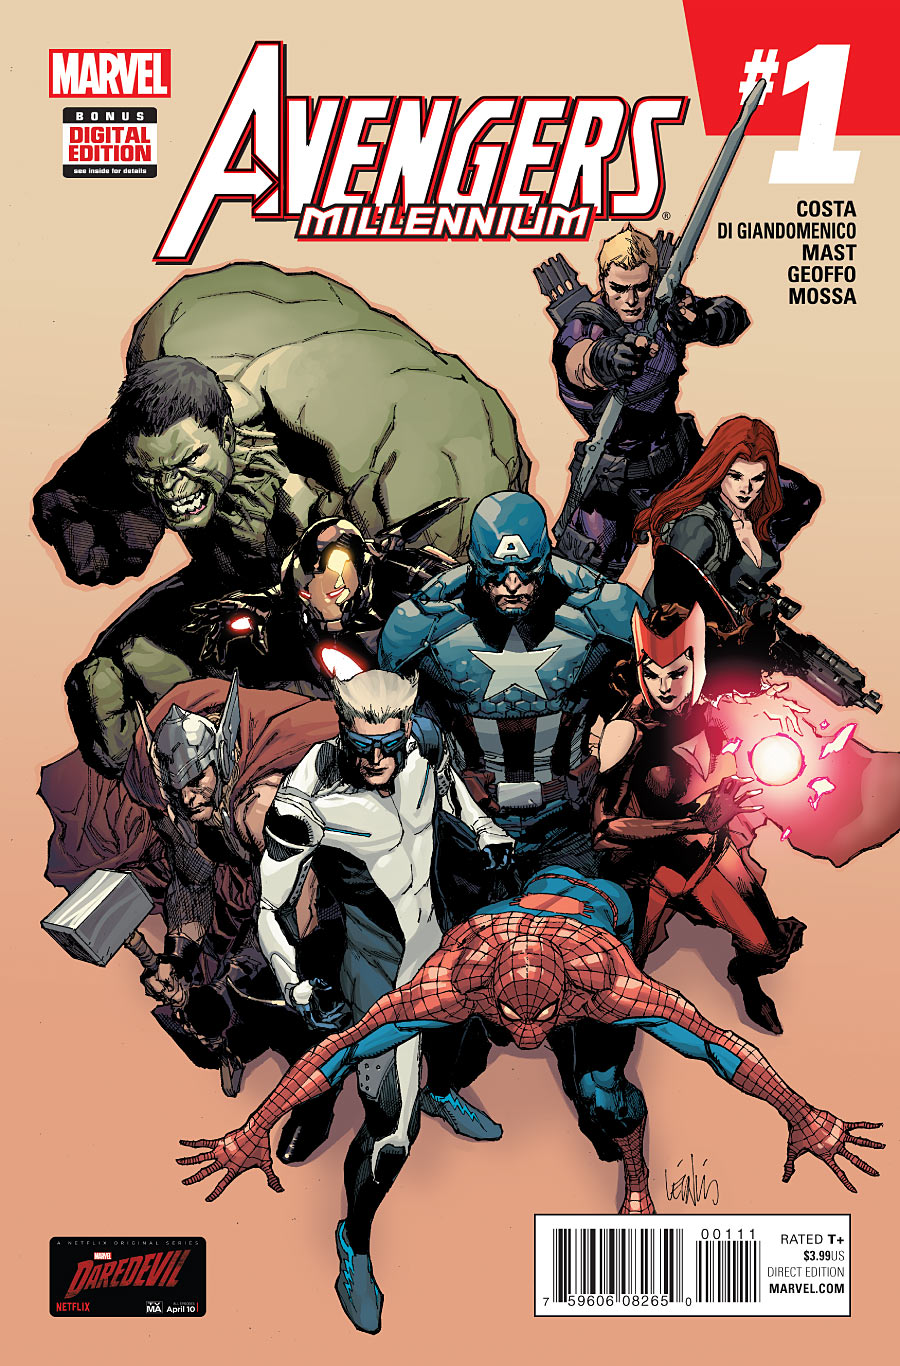 Avengers: Millennium Vol. 1 #1